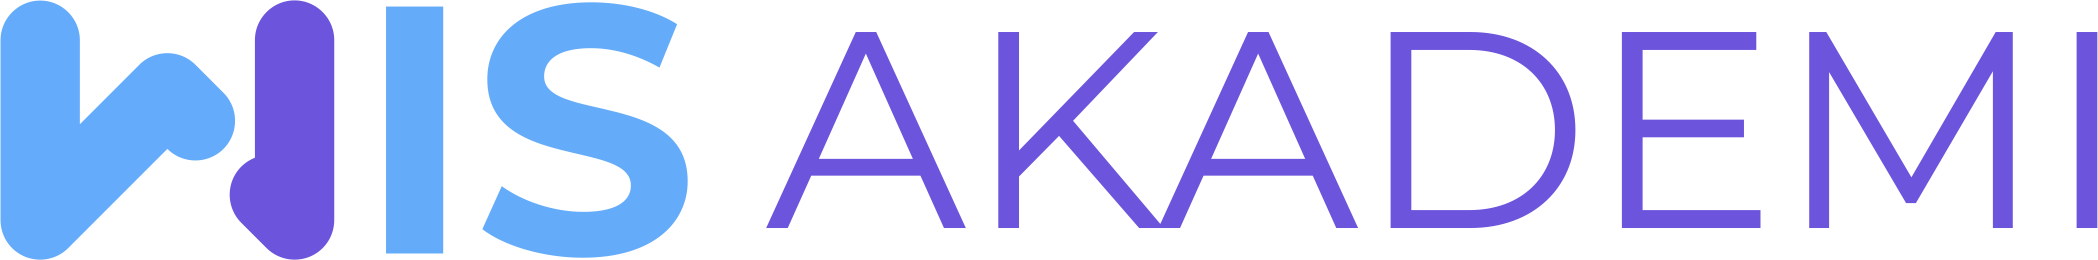 Wisakademi Logo